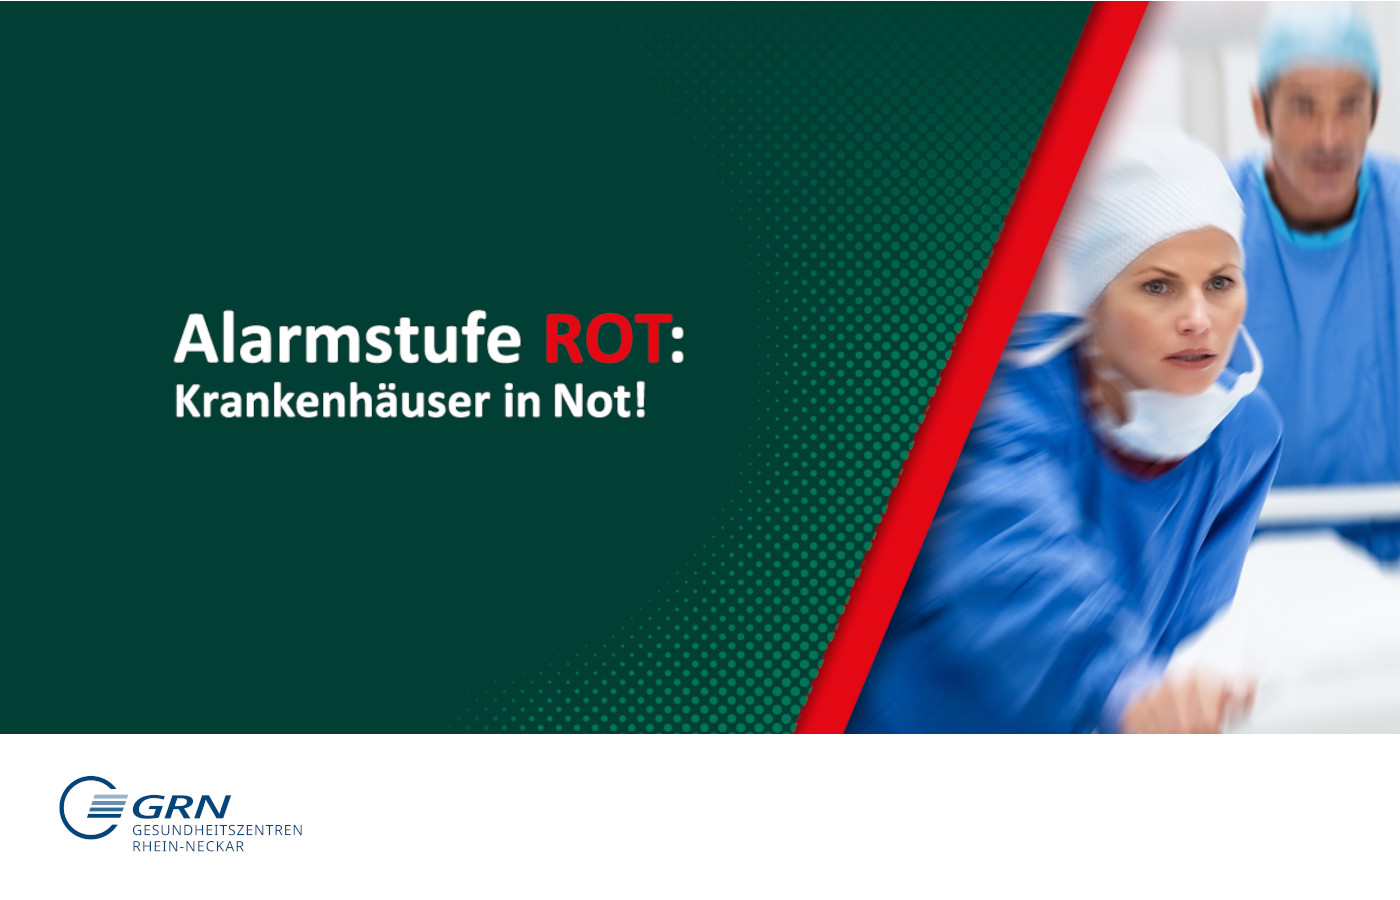 DKG-Aktion "Alarmstufe Rot - Krankenhäuser in Not" in den GRN-Kliniken